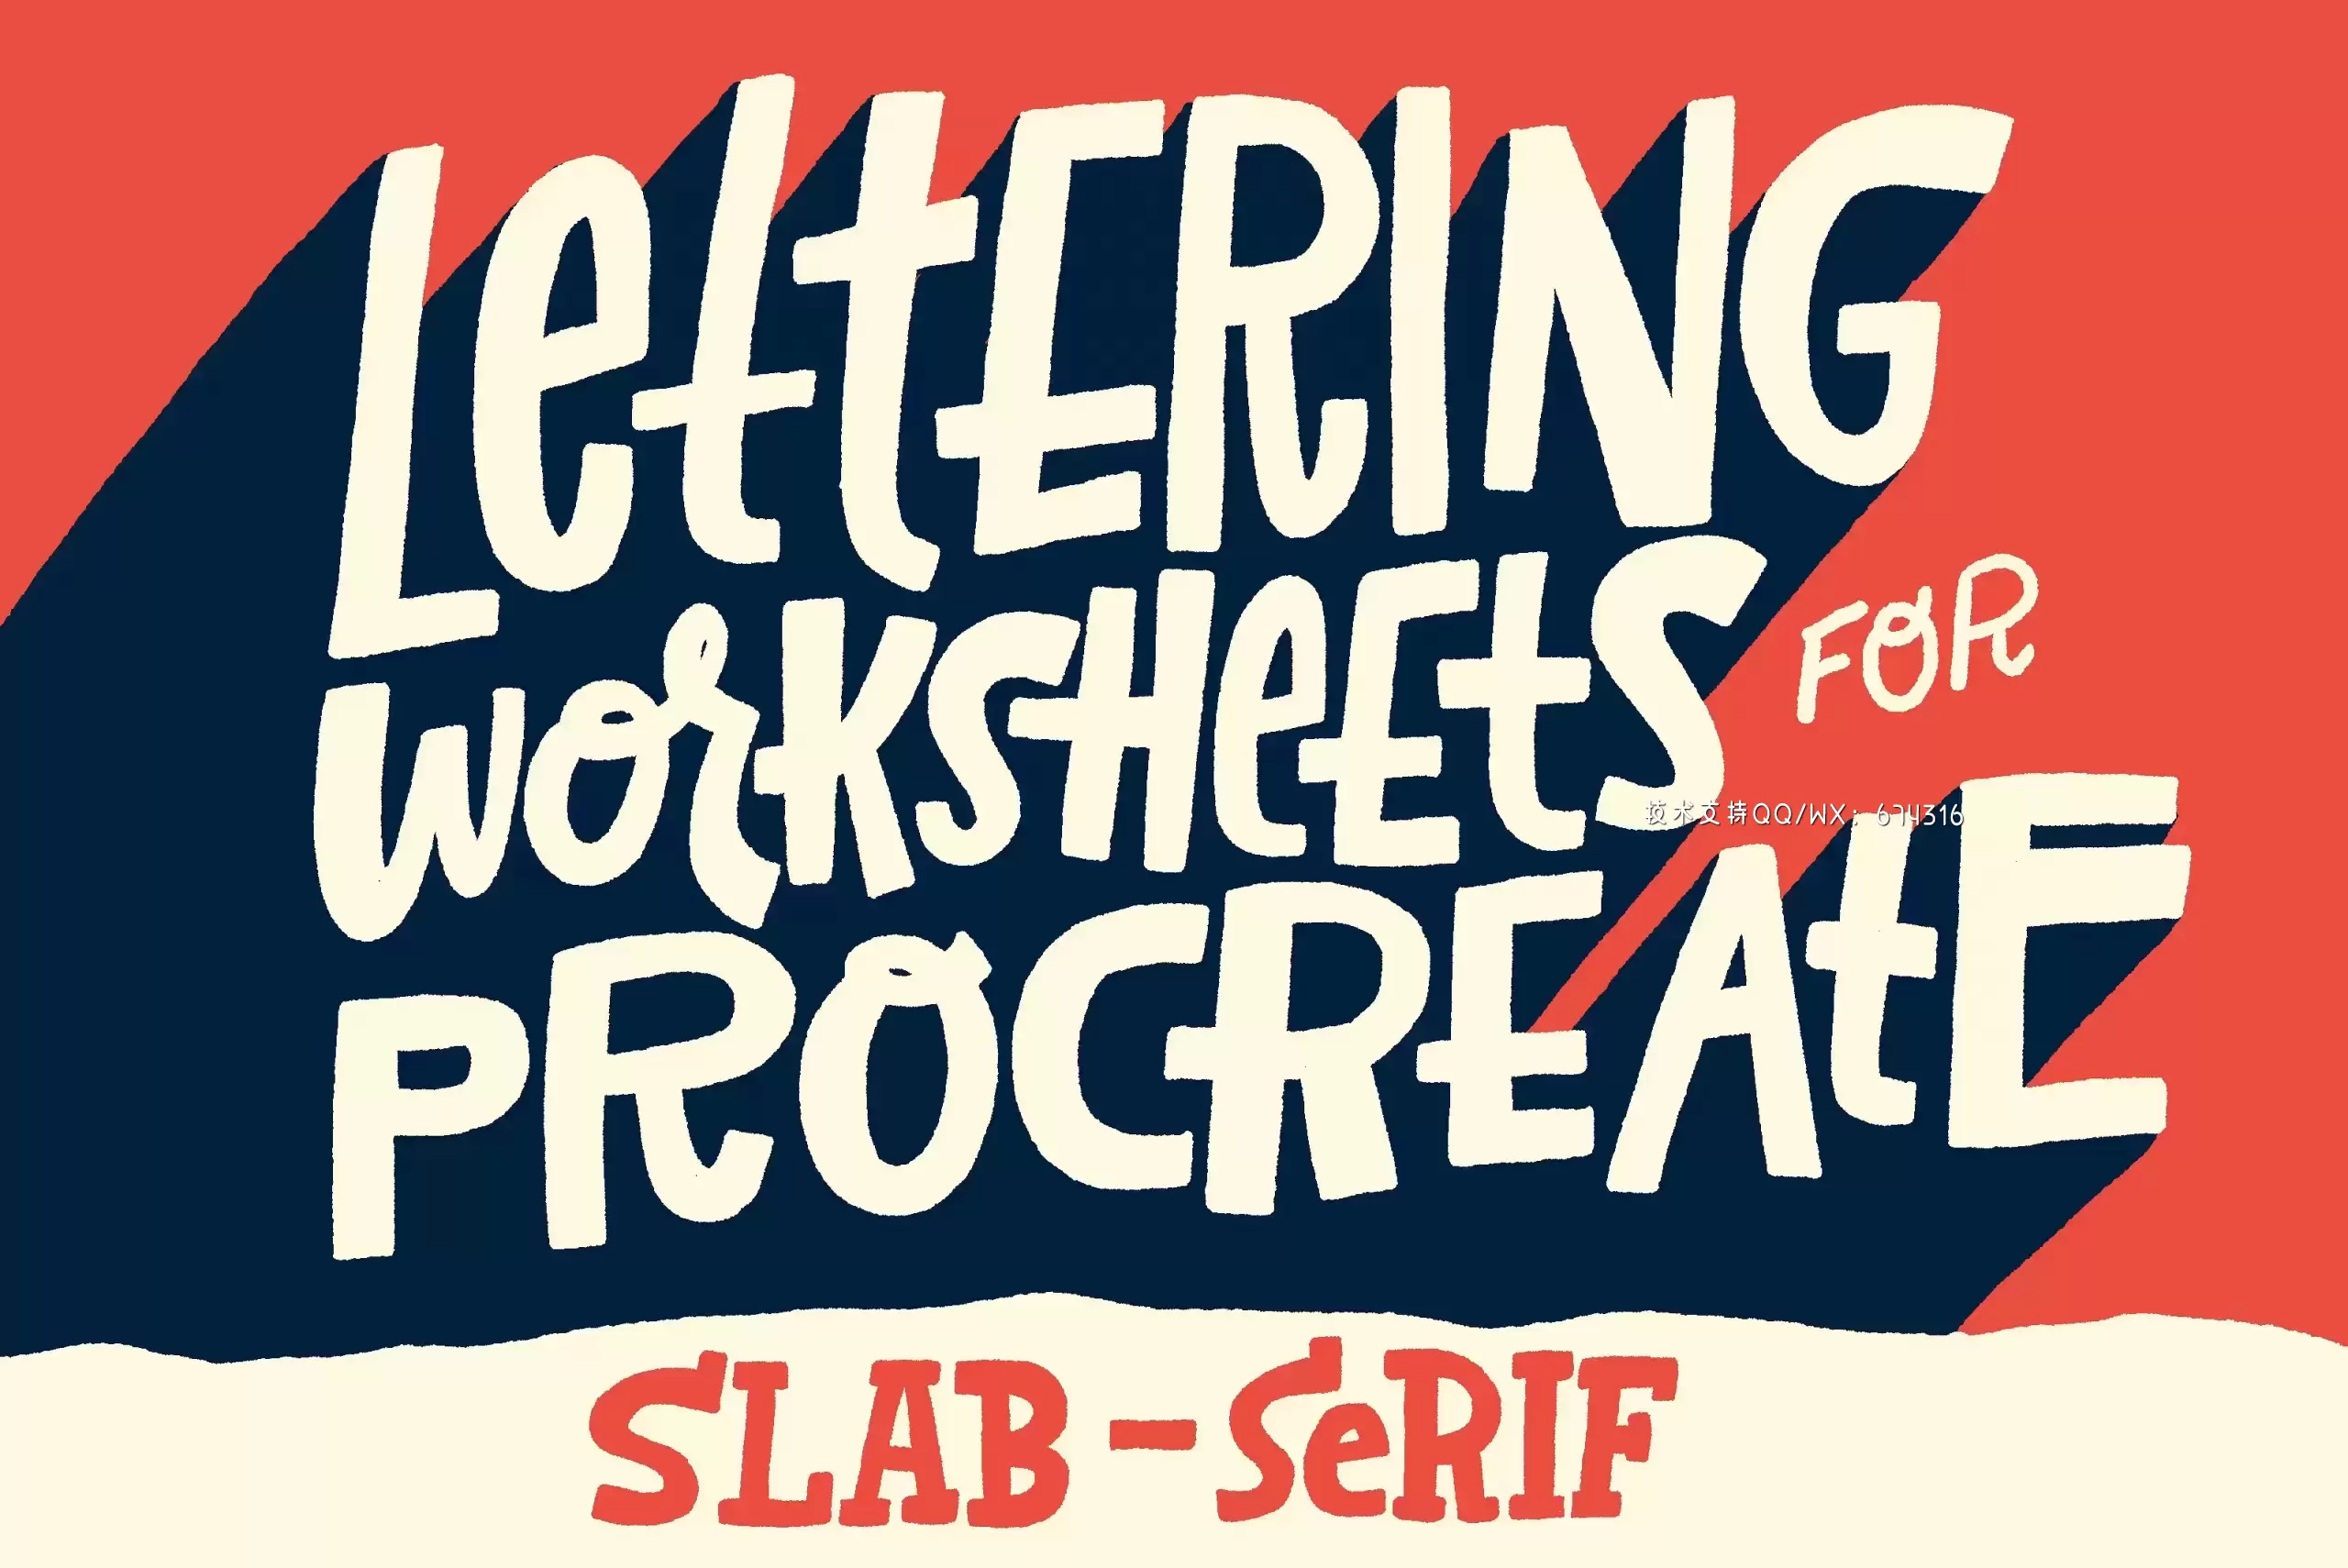 手写图层样式字体 Slab-Serif Lettering Worksheet免费下载